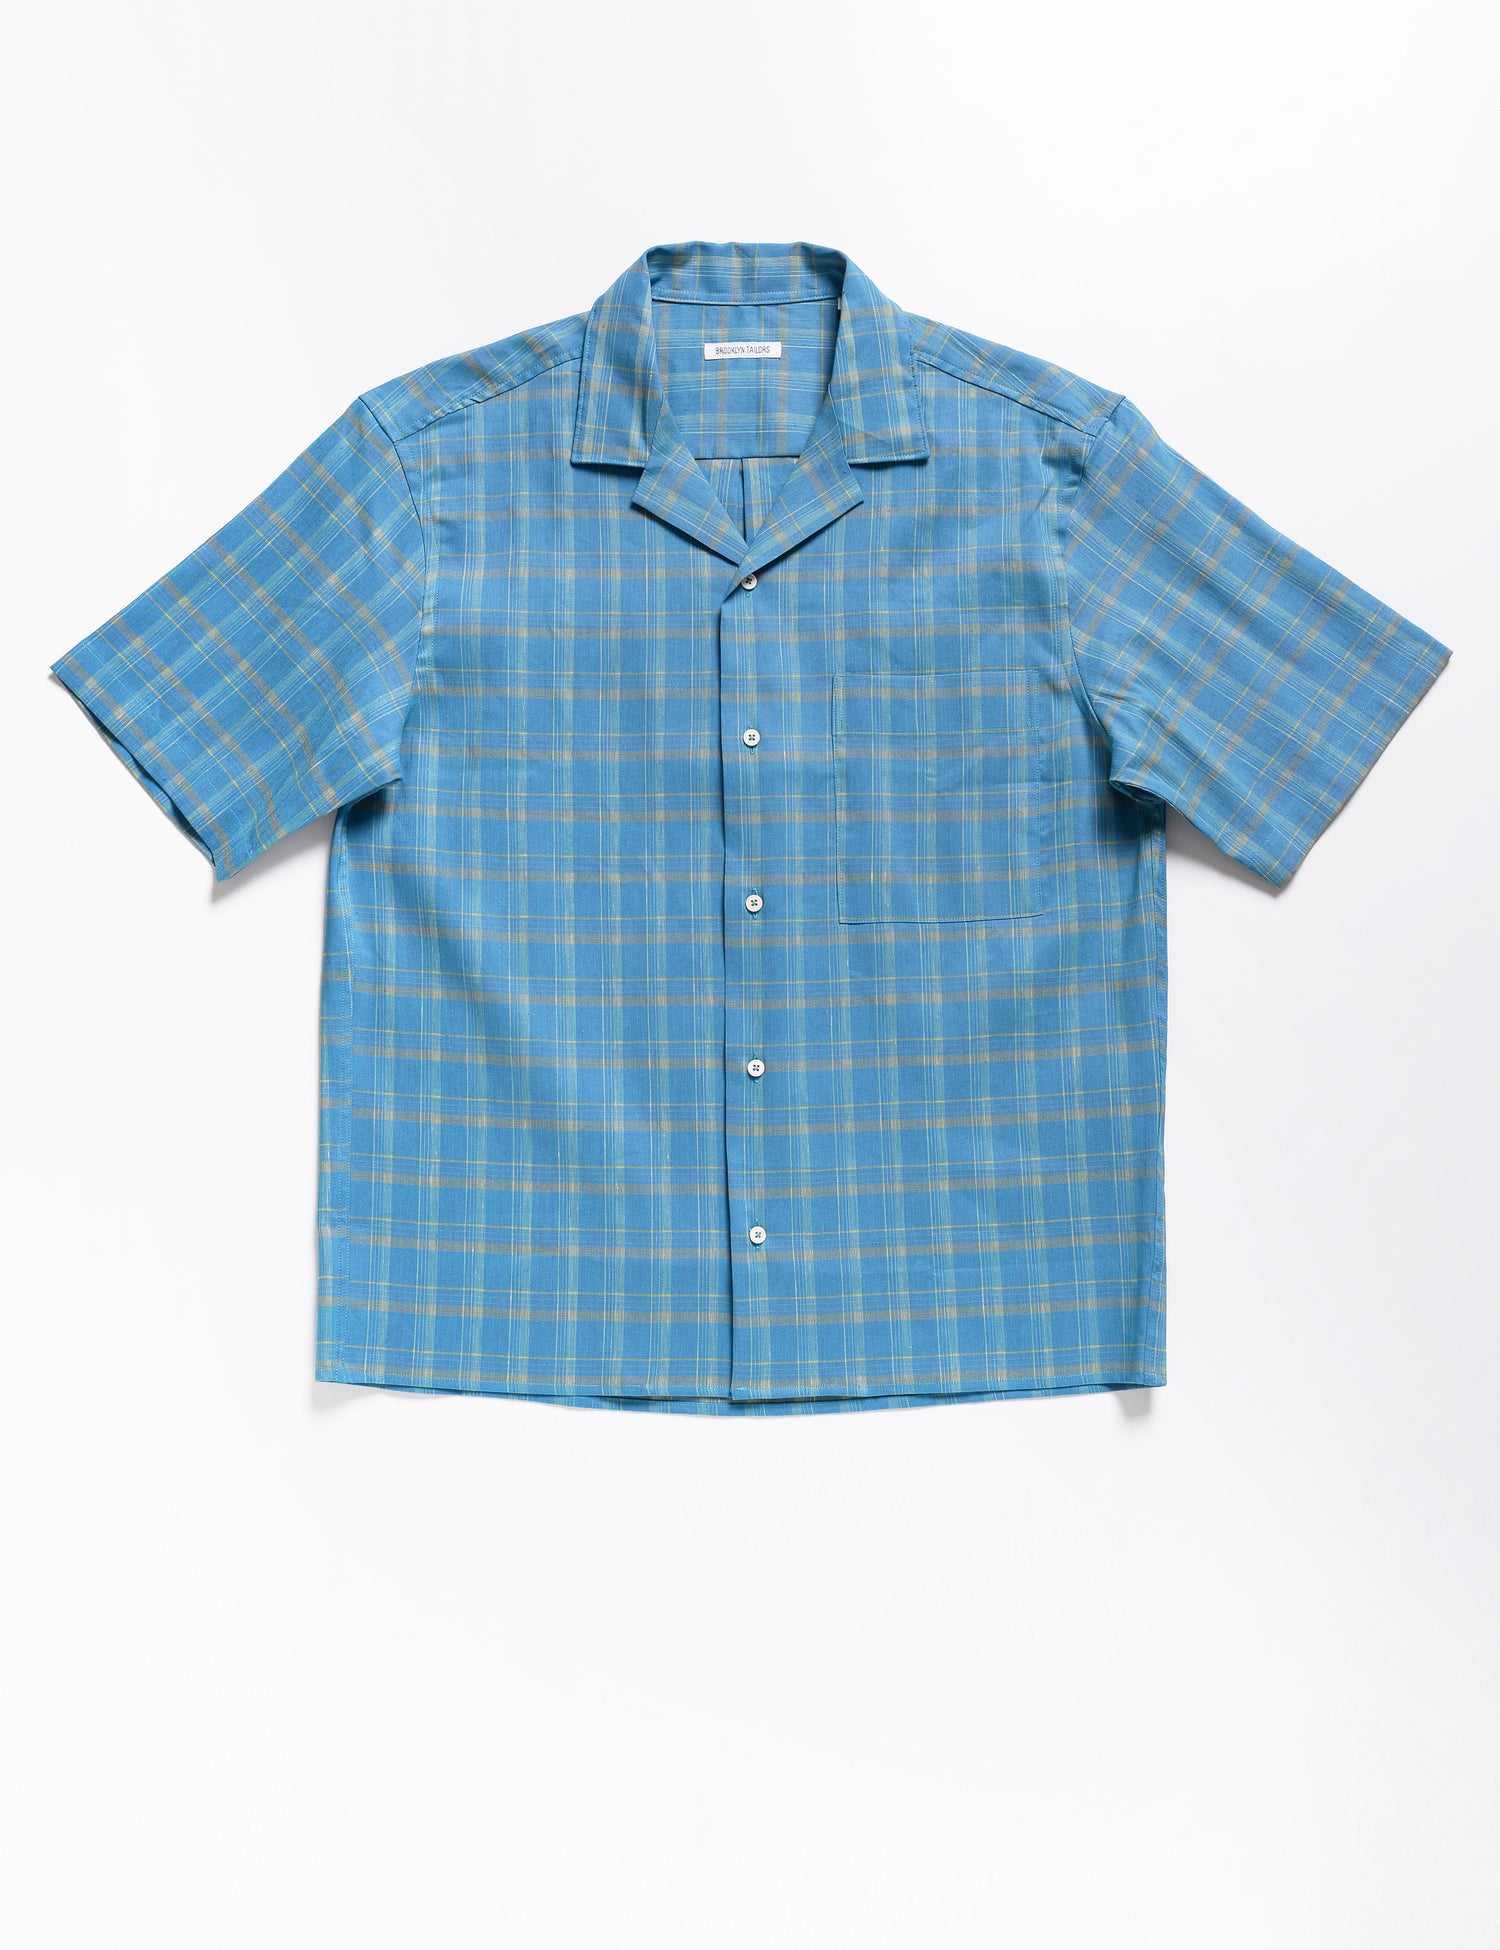 Full length flat shot of Brooklyn Tailors BKT18 Camp Shirt in Roman Check - Ionian Blue